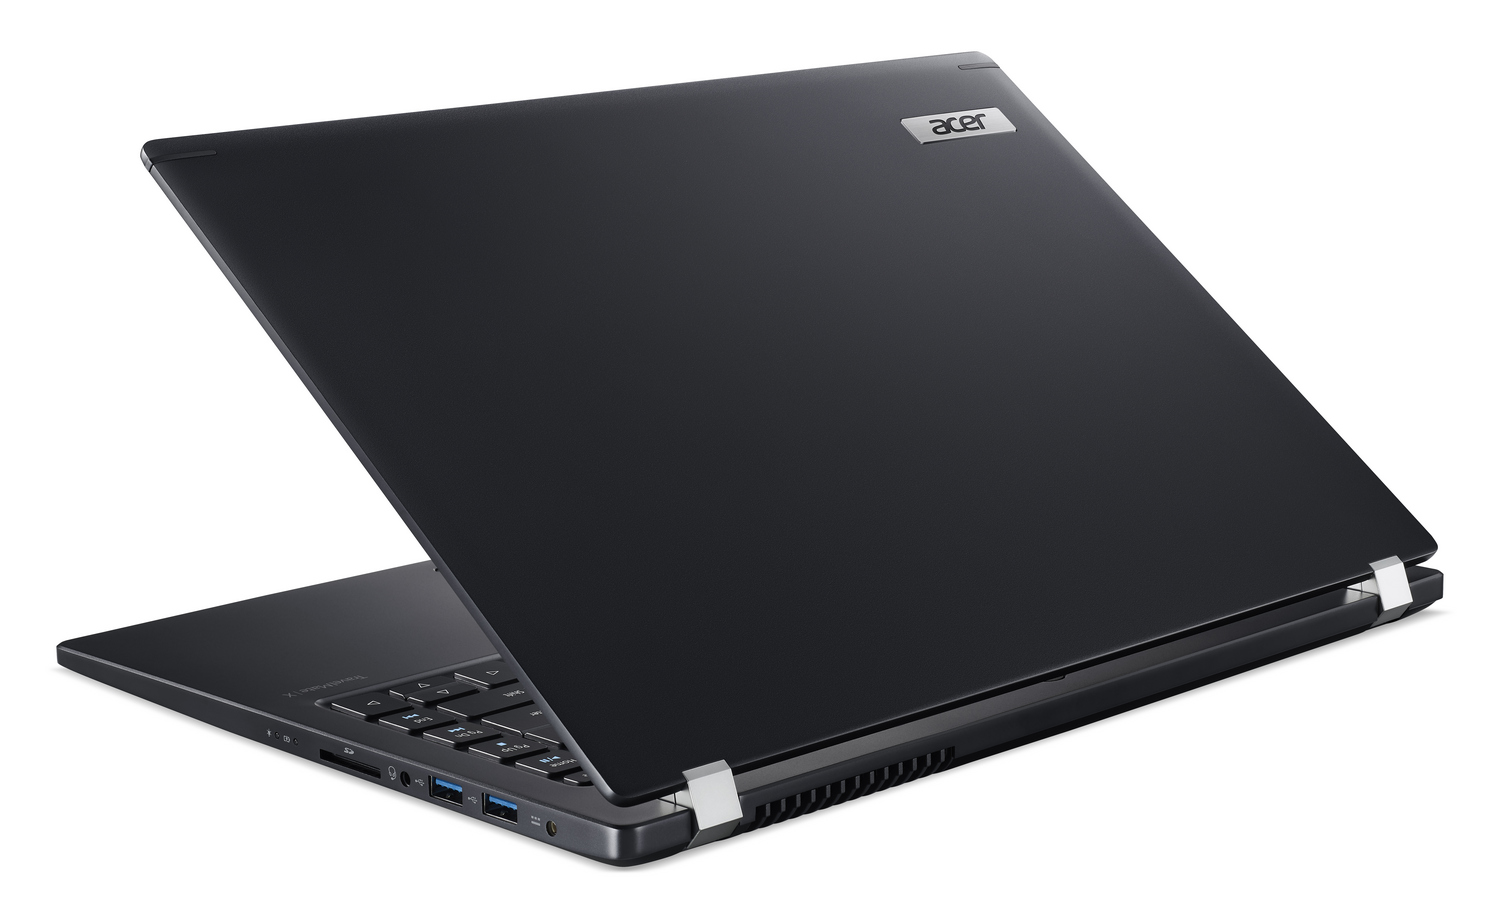 Acer Announces Travelmate X3410 Business Class Notebook